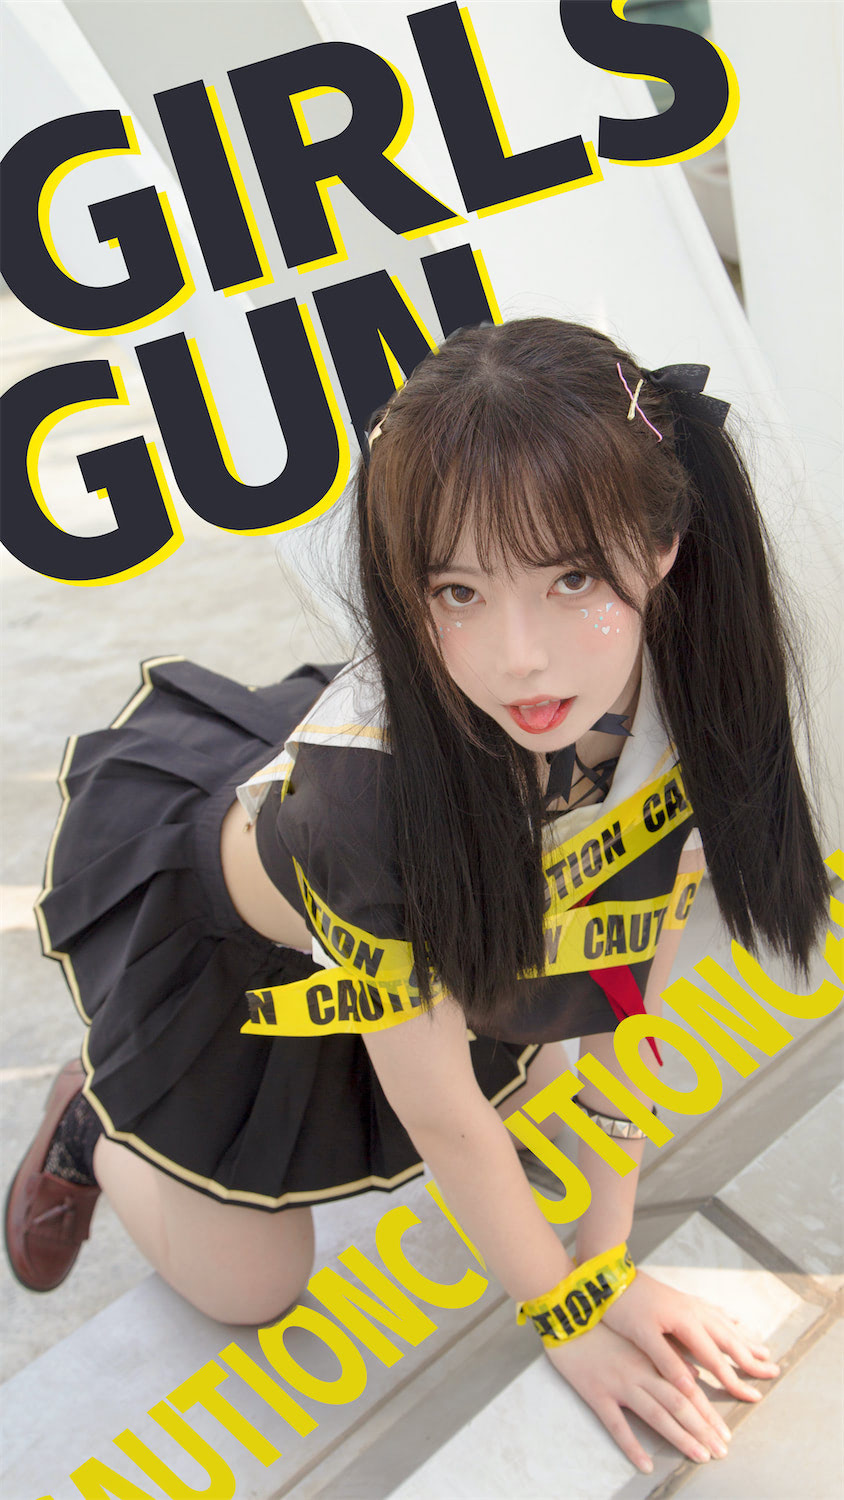 Fushii_海堂禁止GUN少女40图插图1